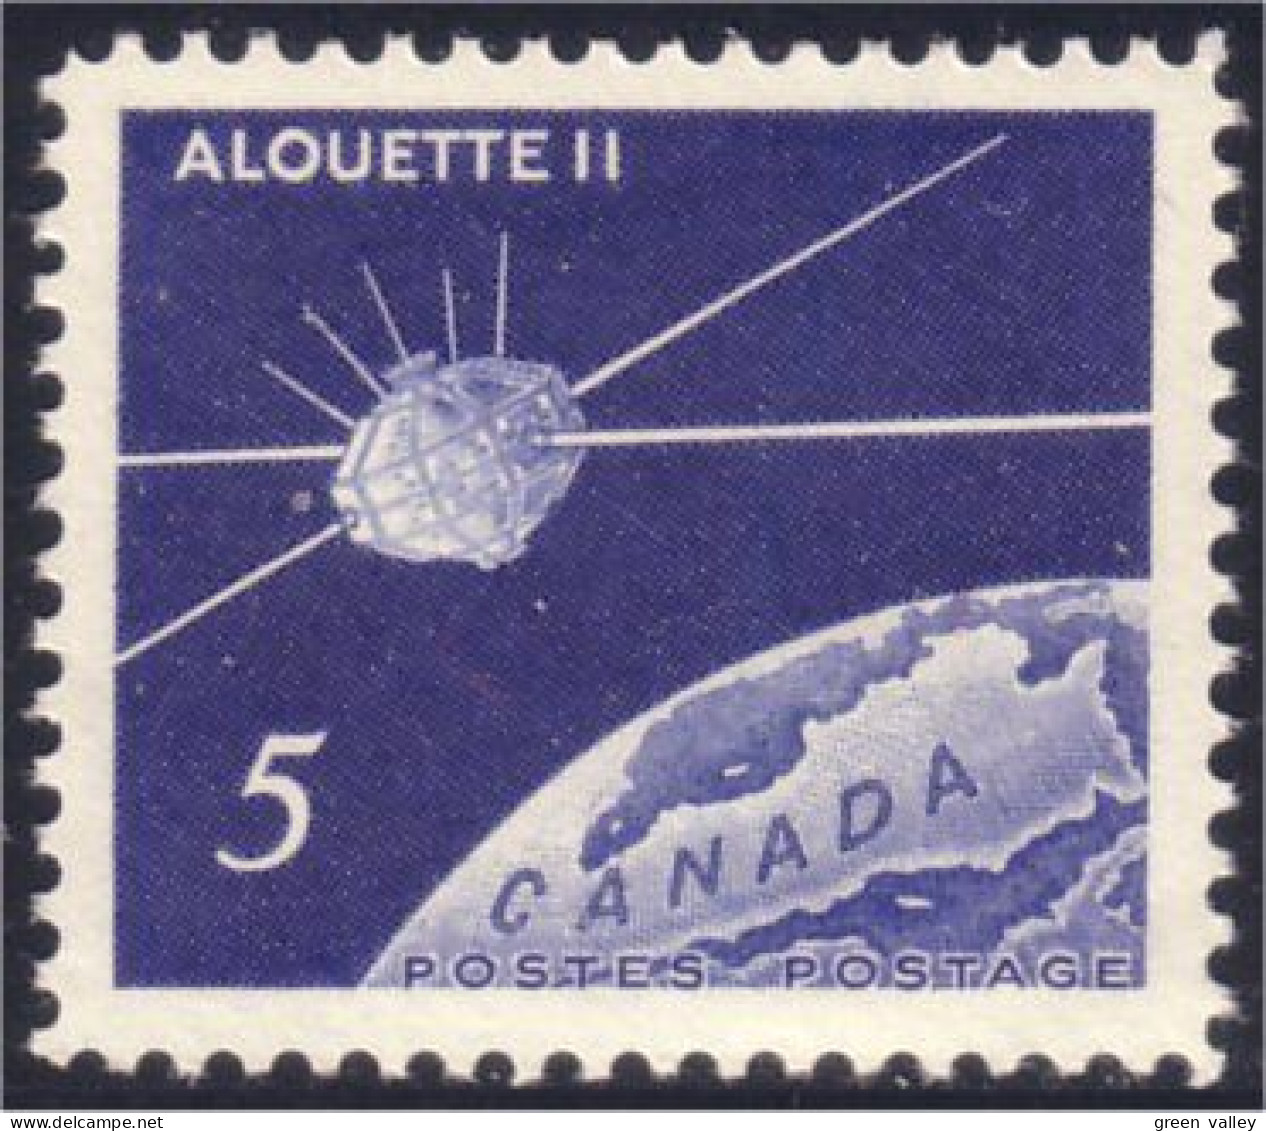 Canada Satellite Comuunications MNH ** Neuf SC (04-45c) - Etats-Unis